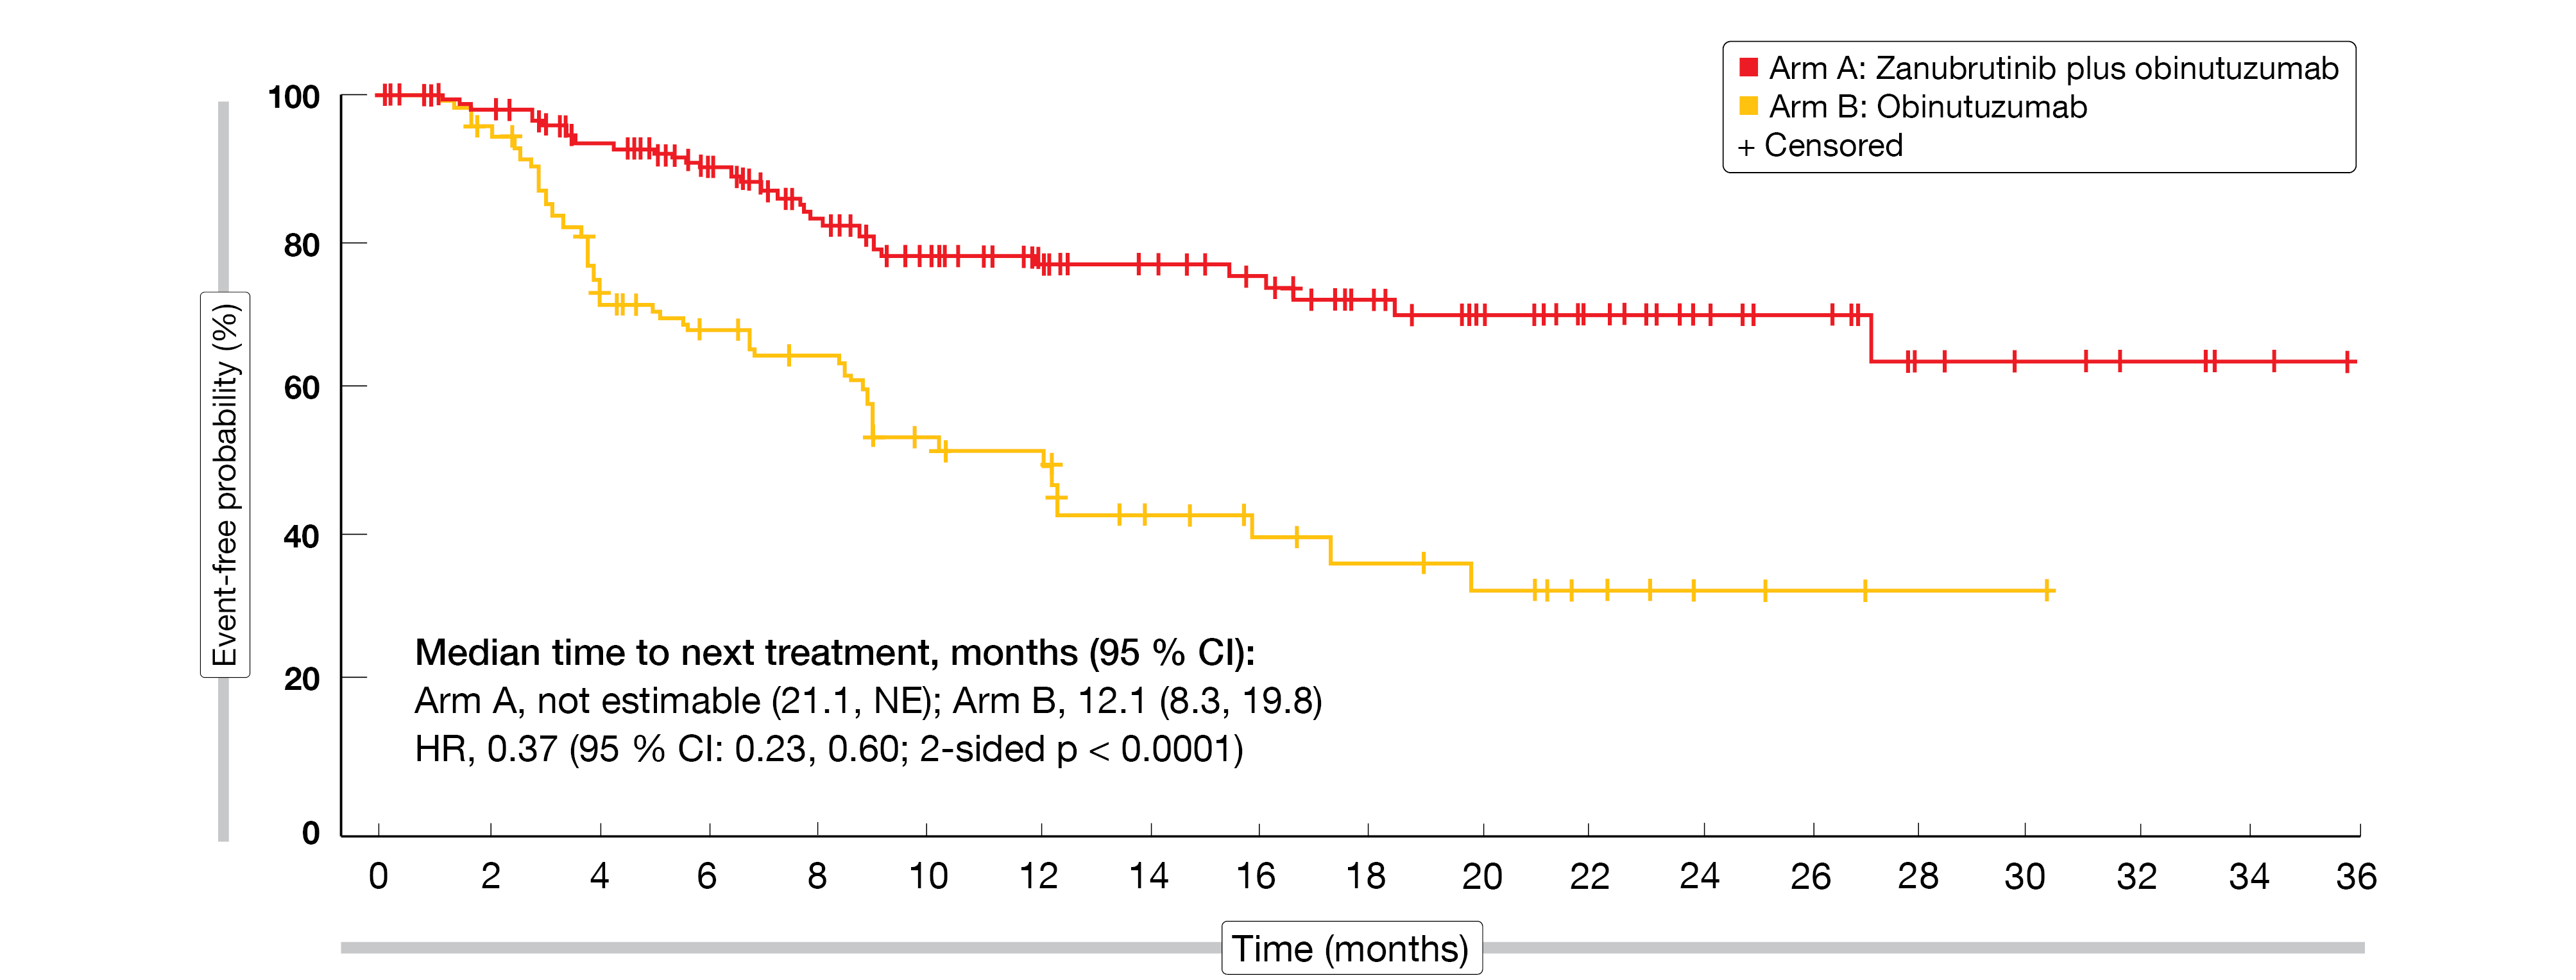 Figure 1: Superior time to next anti-lymphoma treatment with zanubrutinib/obinutuzumab vs. obinutuzumab monotherapy in the ROSEWOOD trial